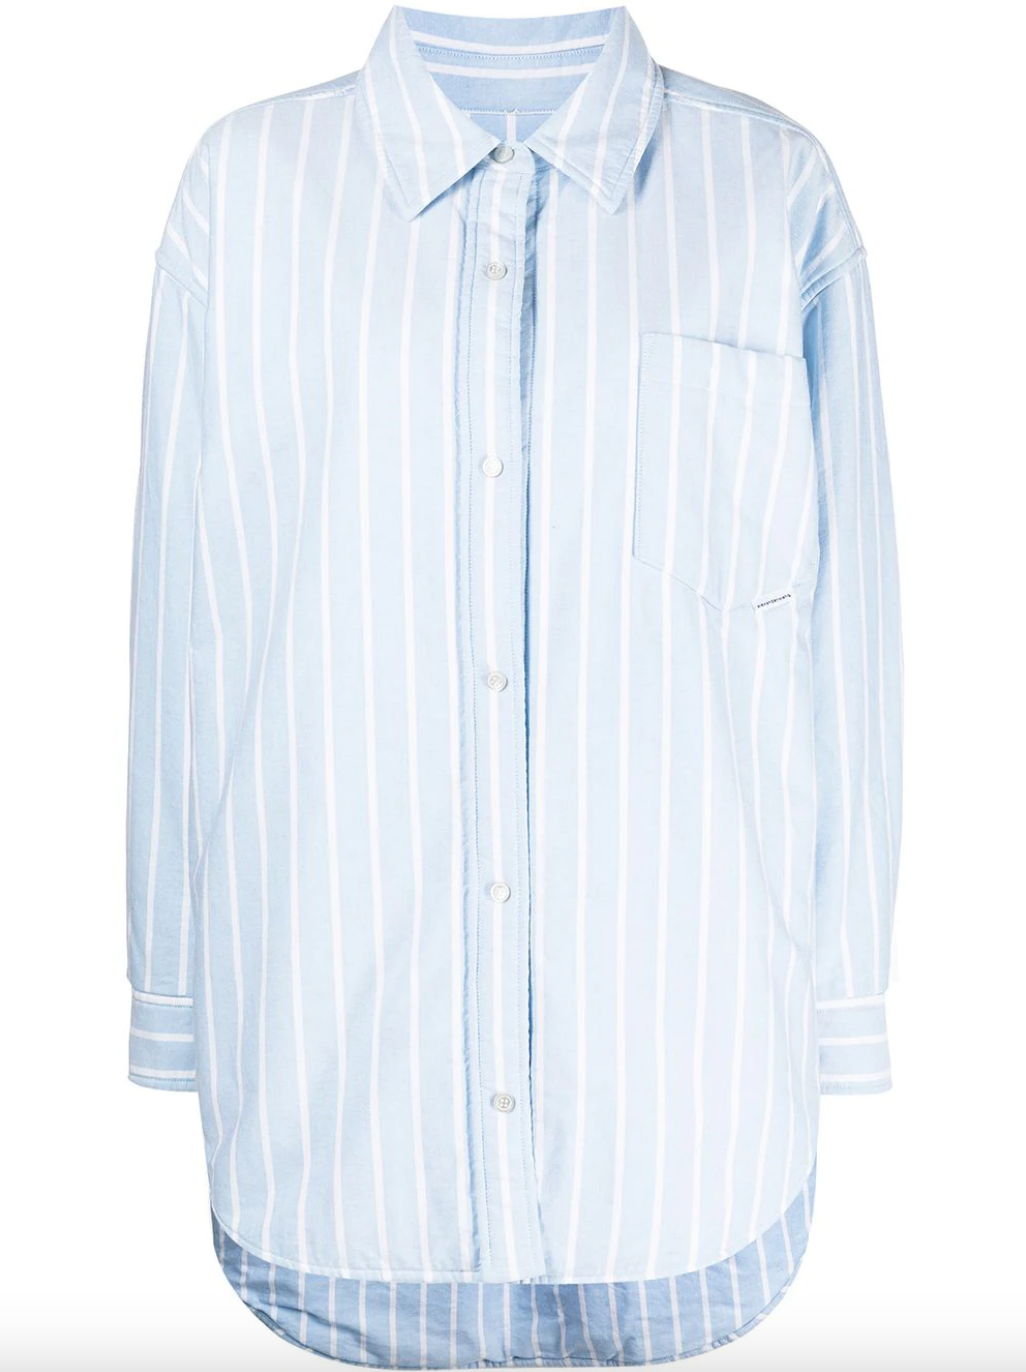 24+ Blue And White Striped Shirt Dress